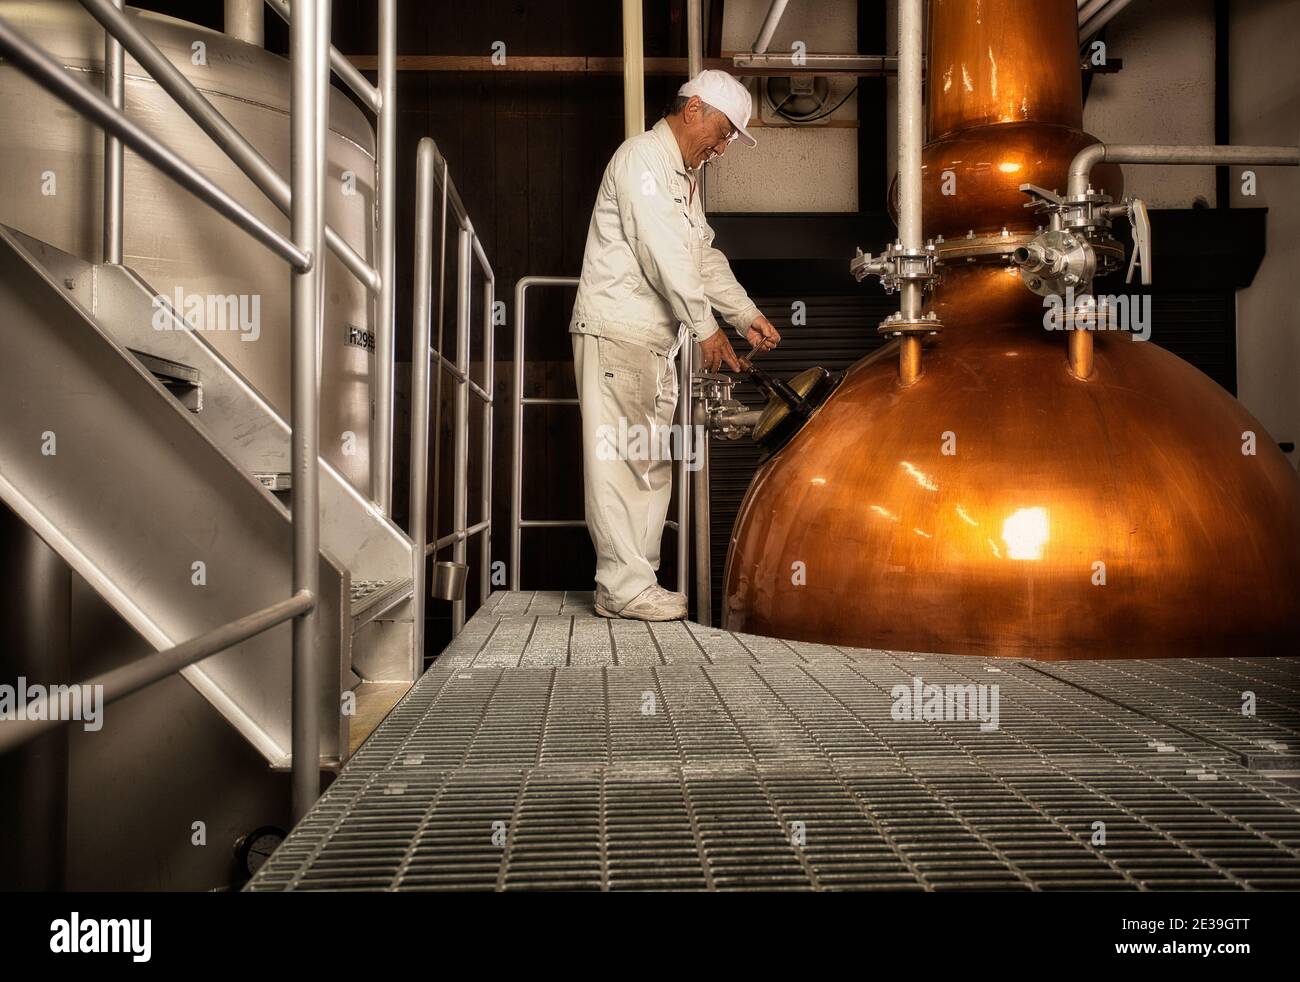 Hatozaki Whisky distillery with master distiller and blender Kimio Yonezawa, in Akashi, Japan Stock Photo